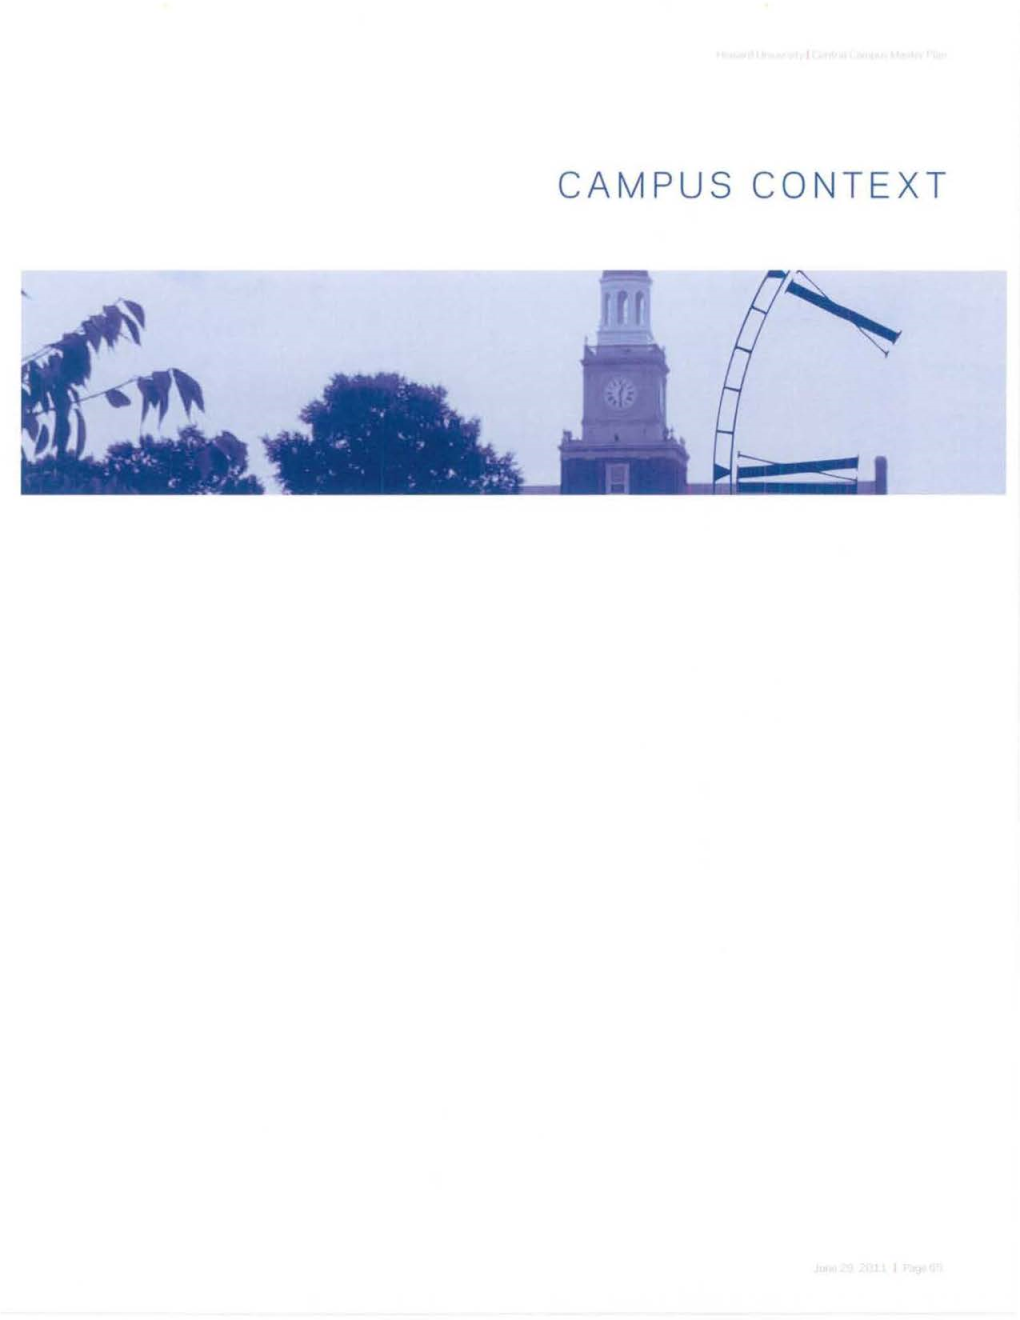 Campus Context Campus Context